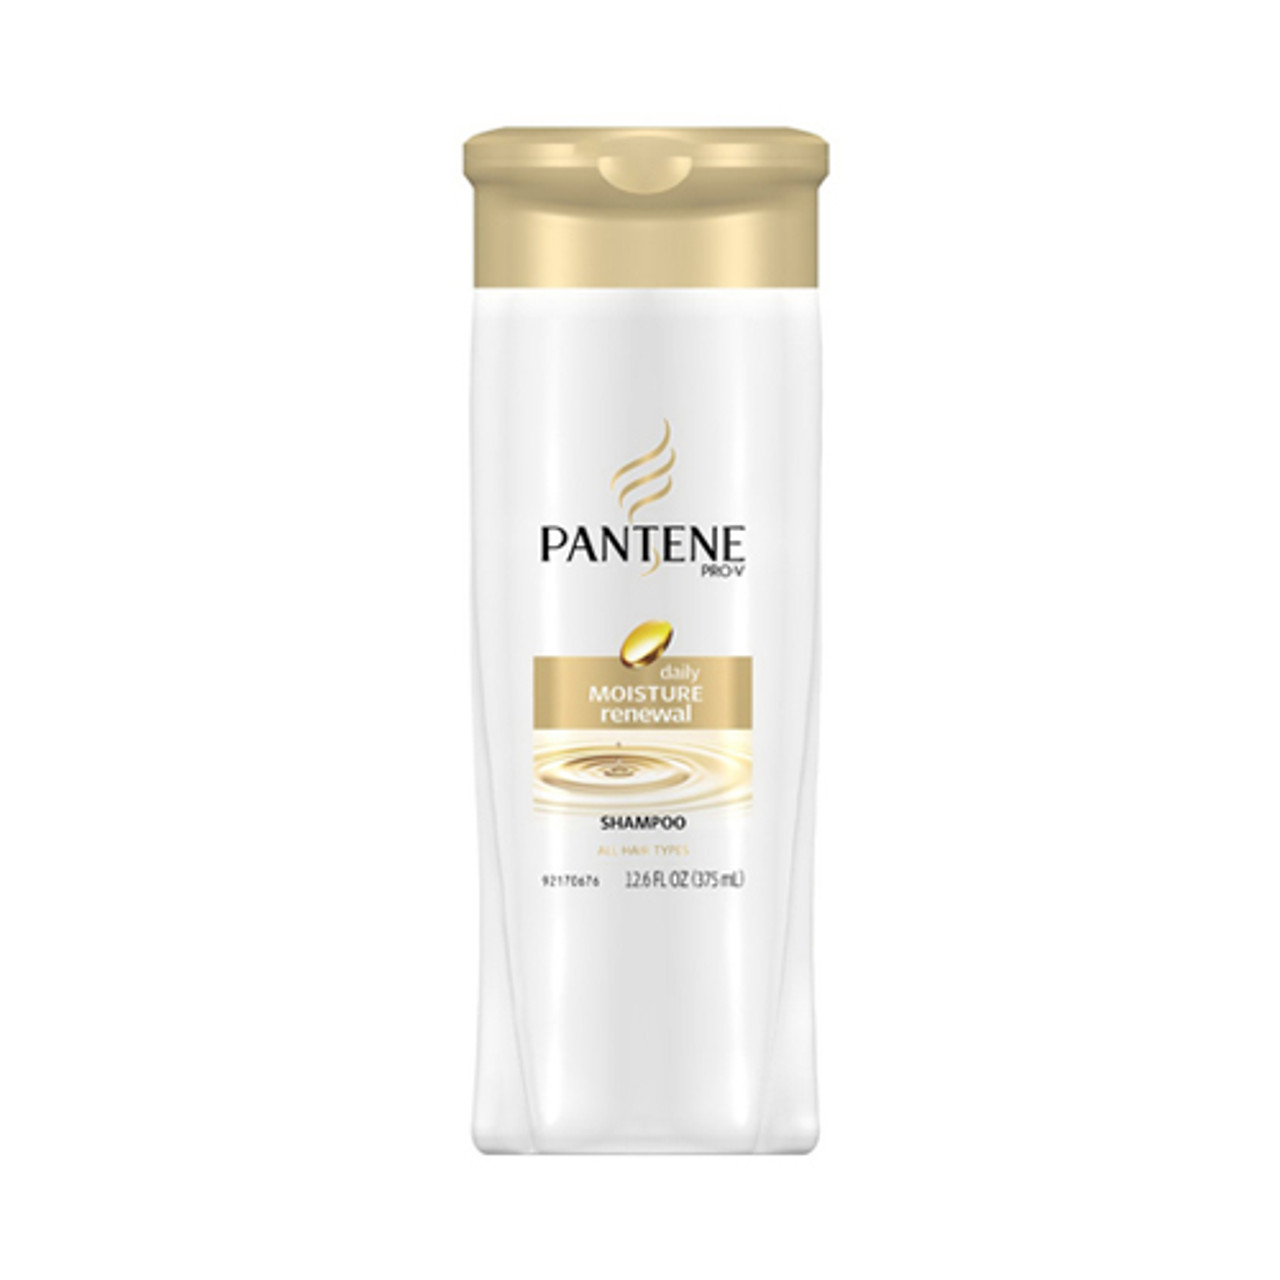 Pantene Pro-V Daily Moisture Renewal Shampoo - 12.6 Oz